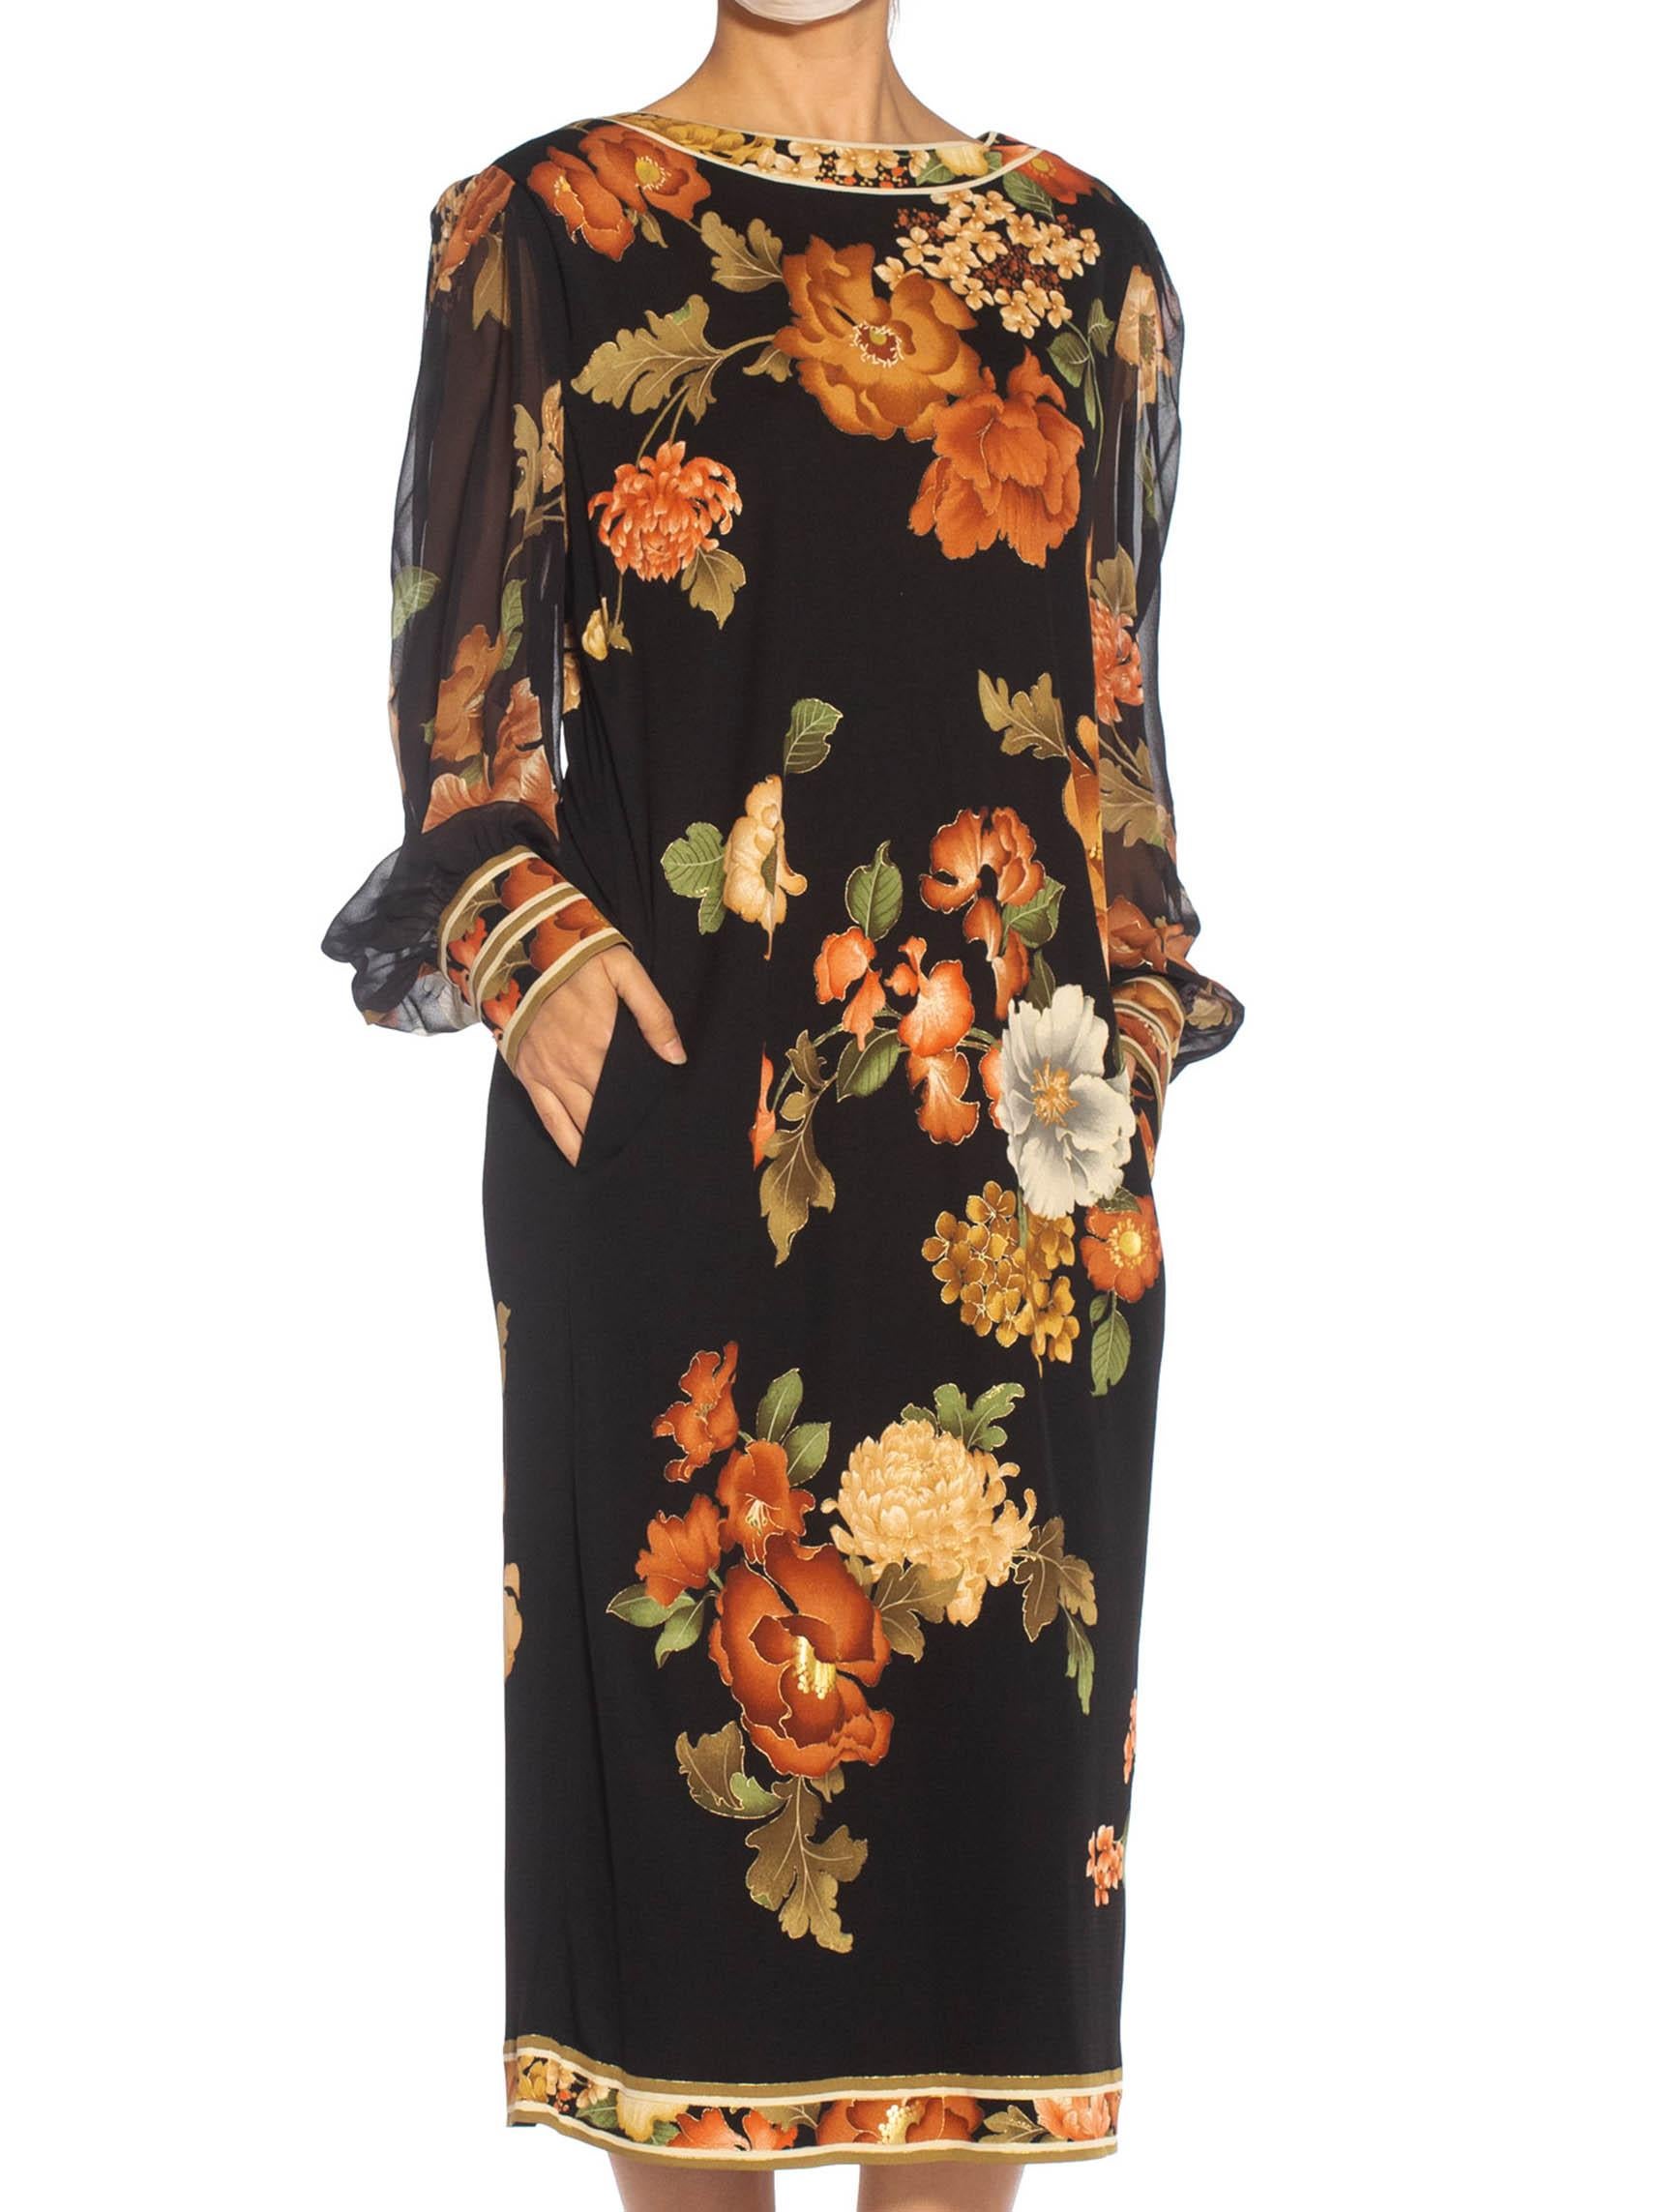 LEONARD Black and Brown Chiffon Floral Printed Long Sleeve Dress with sash 1980S LEONARD Black & Brown Silk Jersey Dress With Chiffon Sleeves Belt 